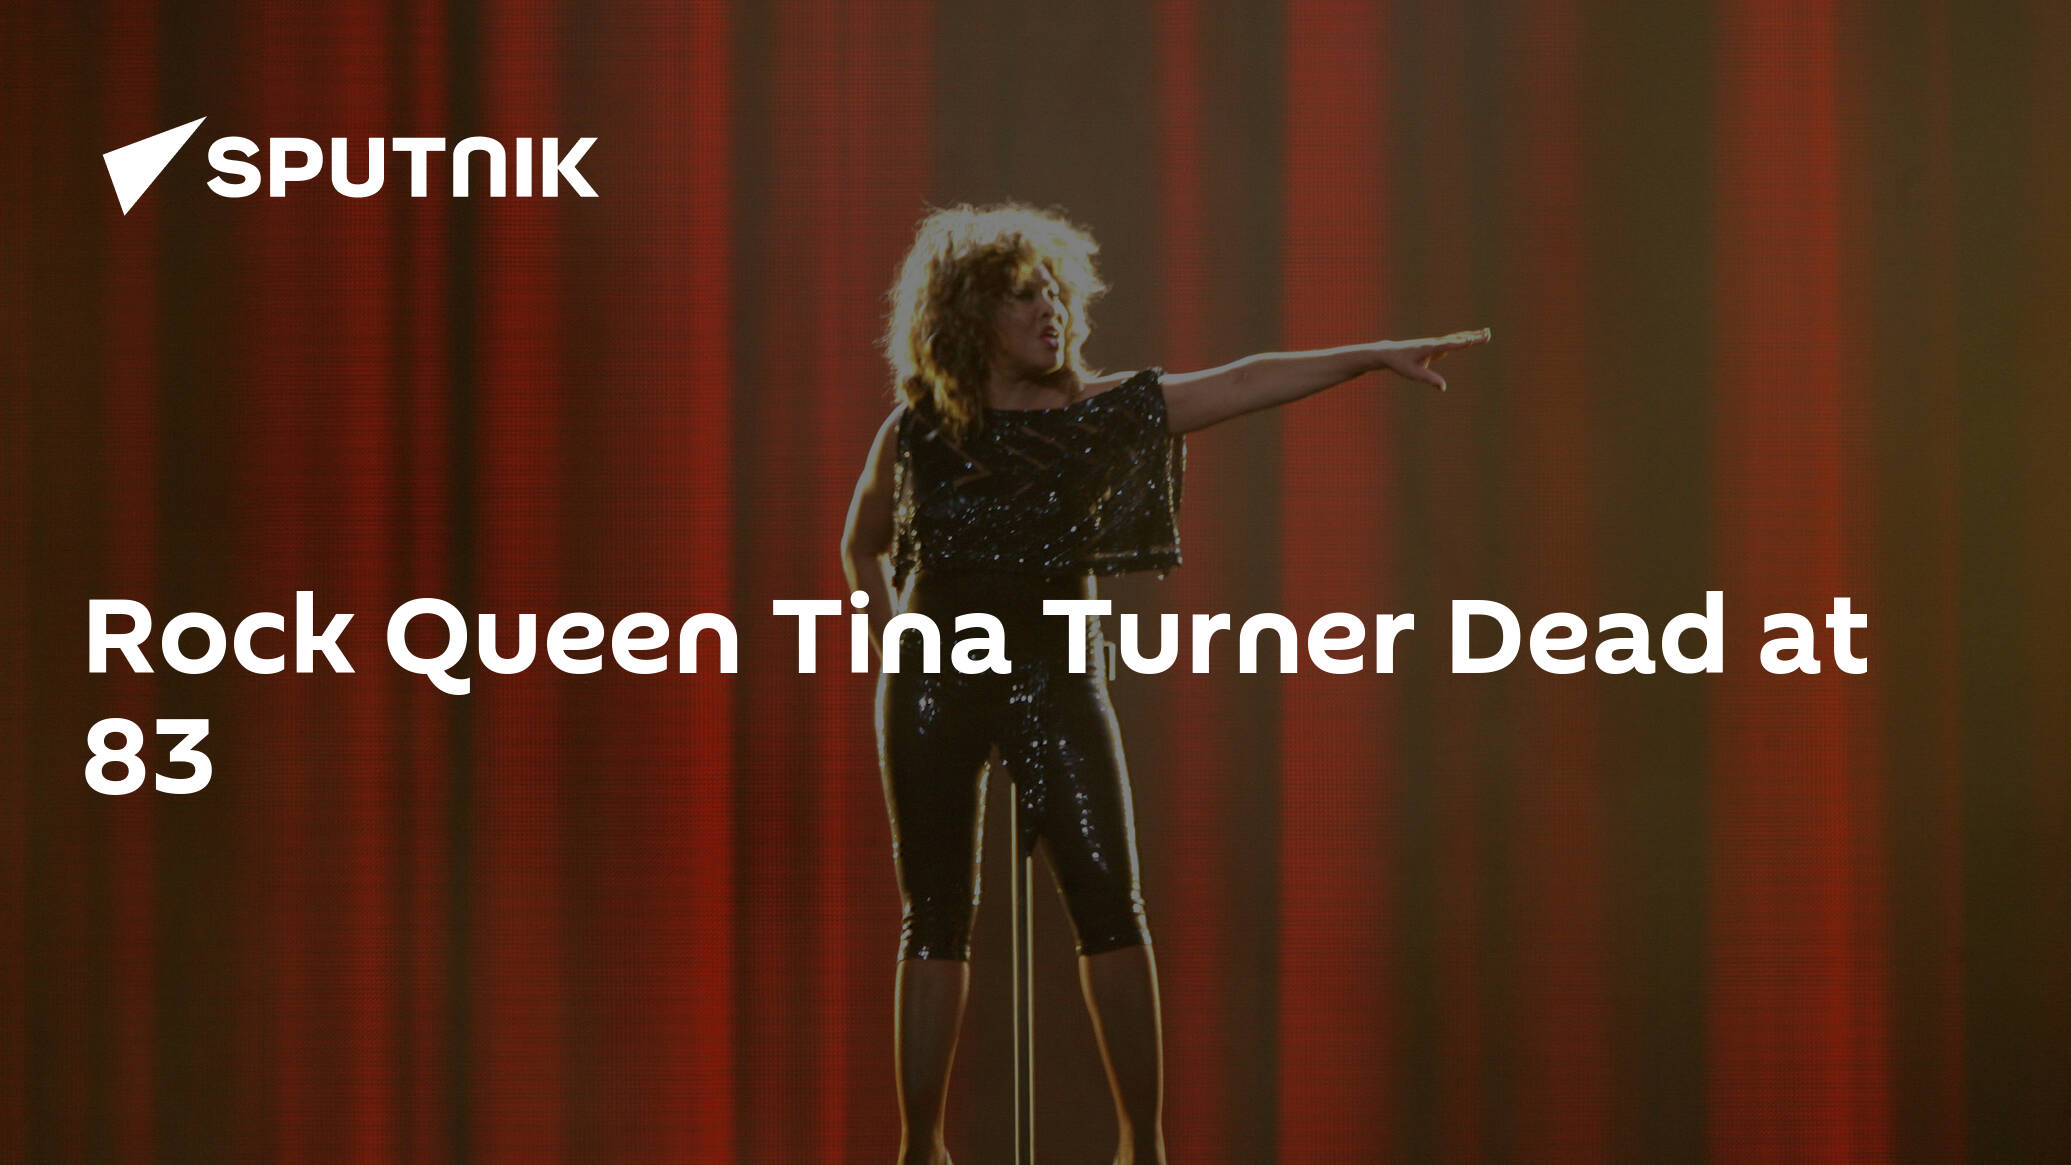 Rock Queen Tina Turner Dead at 83